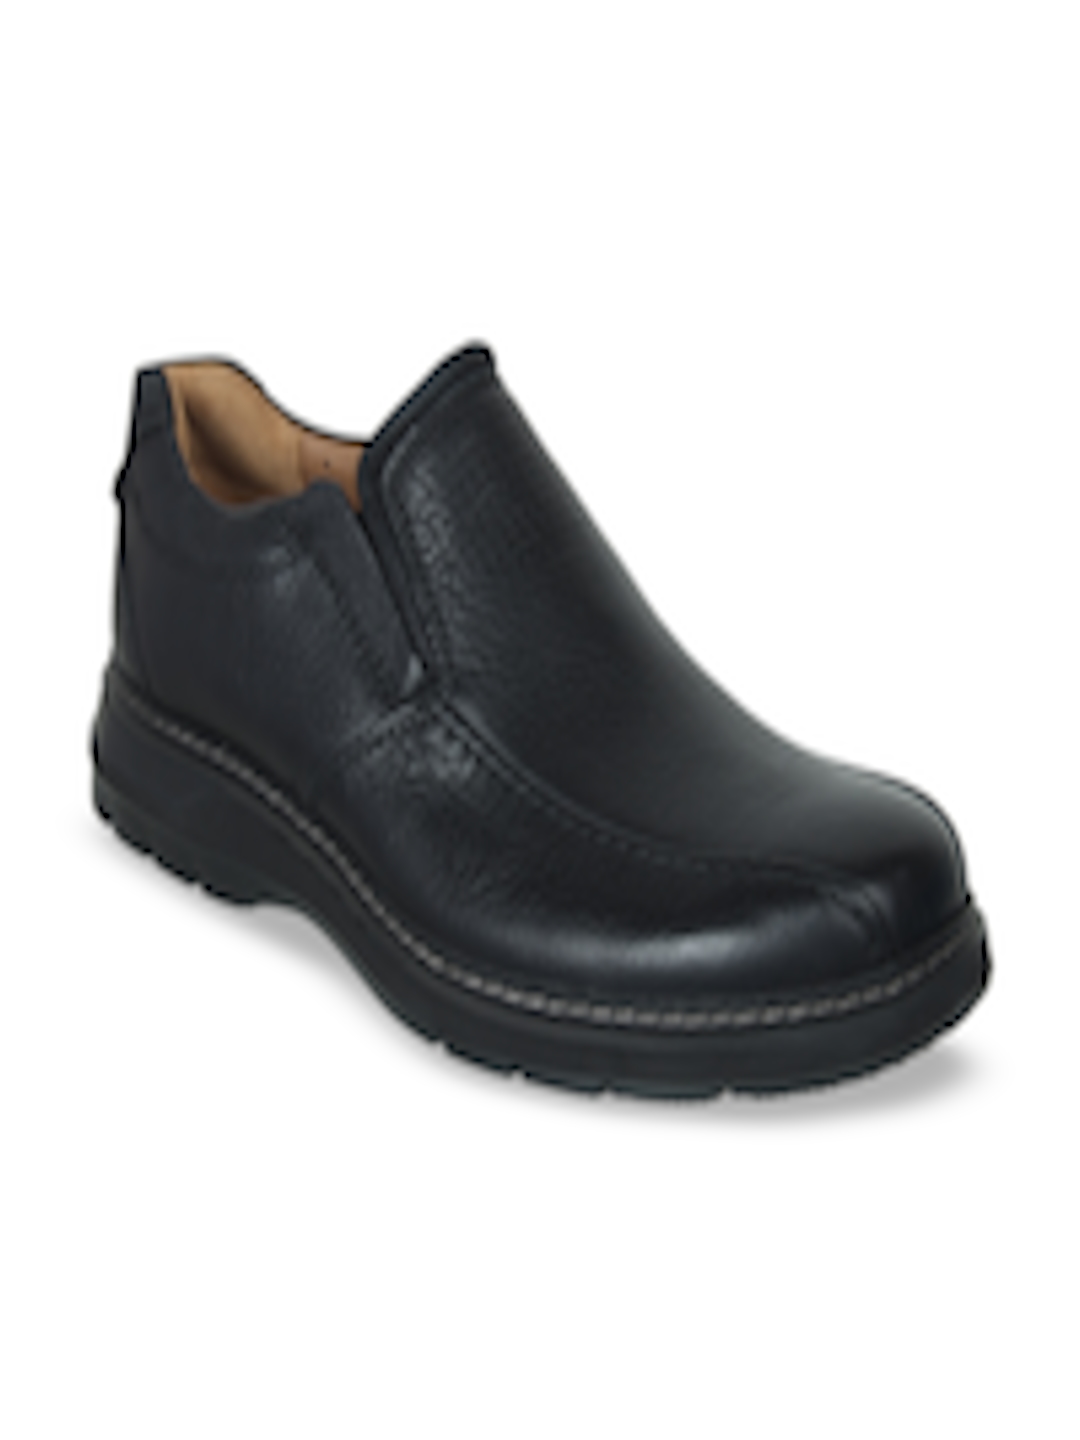 Buy Clarks Men Black Slip On Sneakers - Casual Shoes for Men 11788804 ...